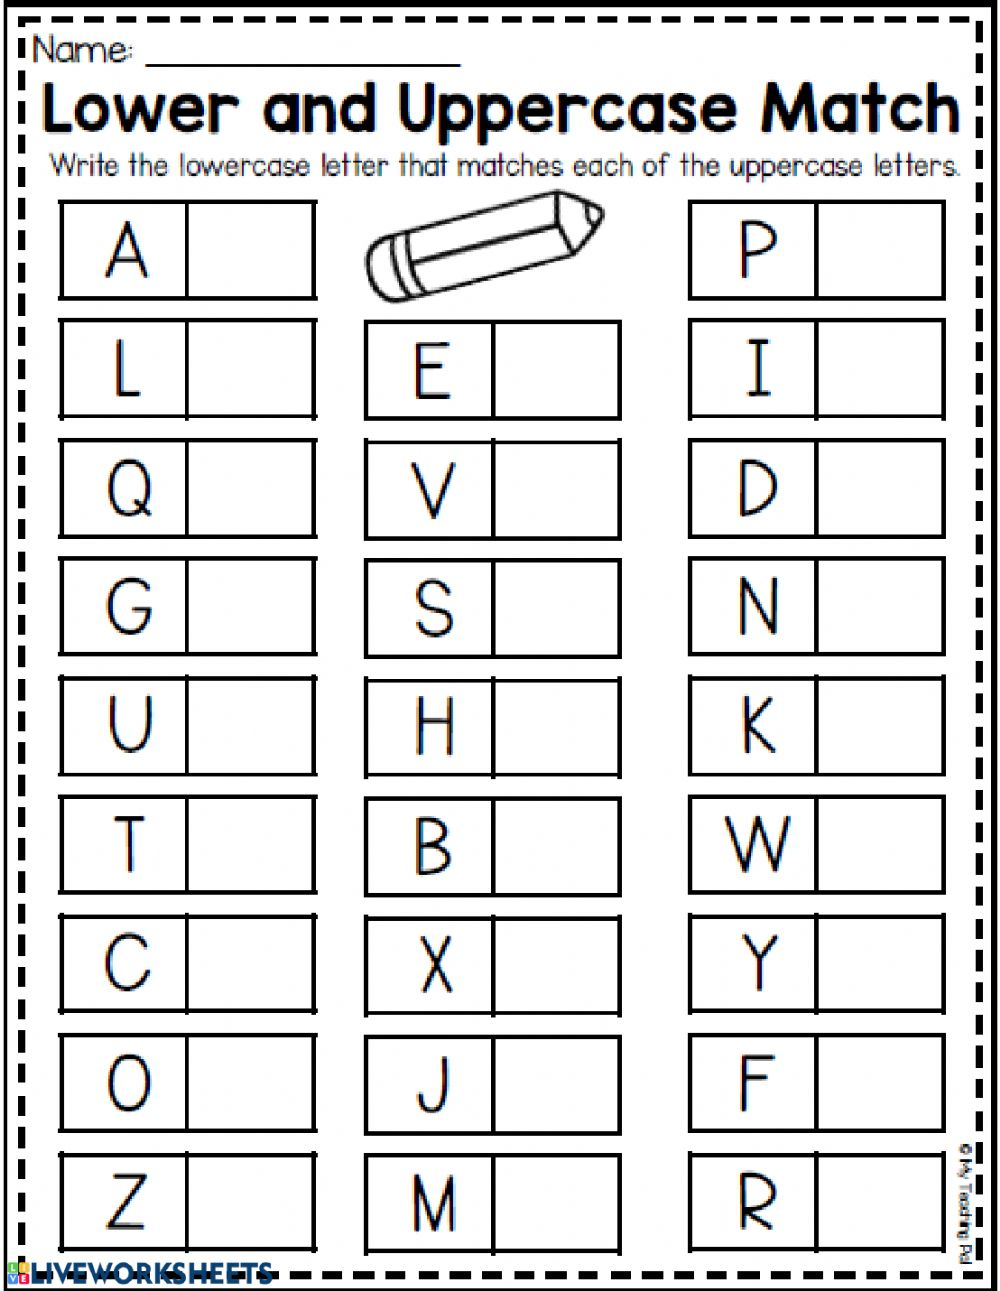 Alphabet Worksheets Matching